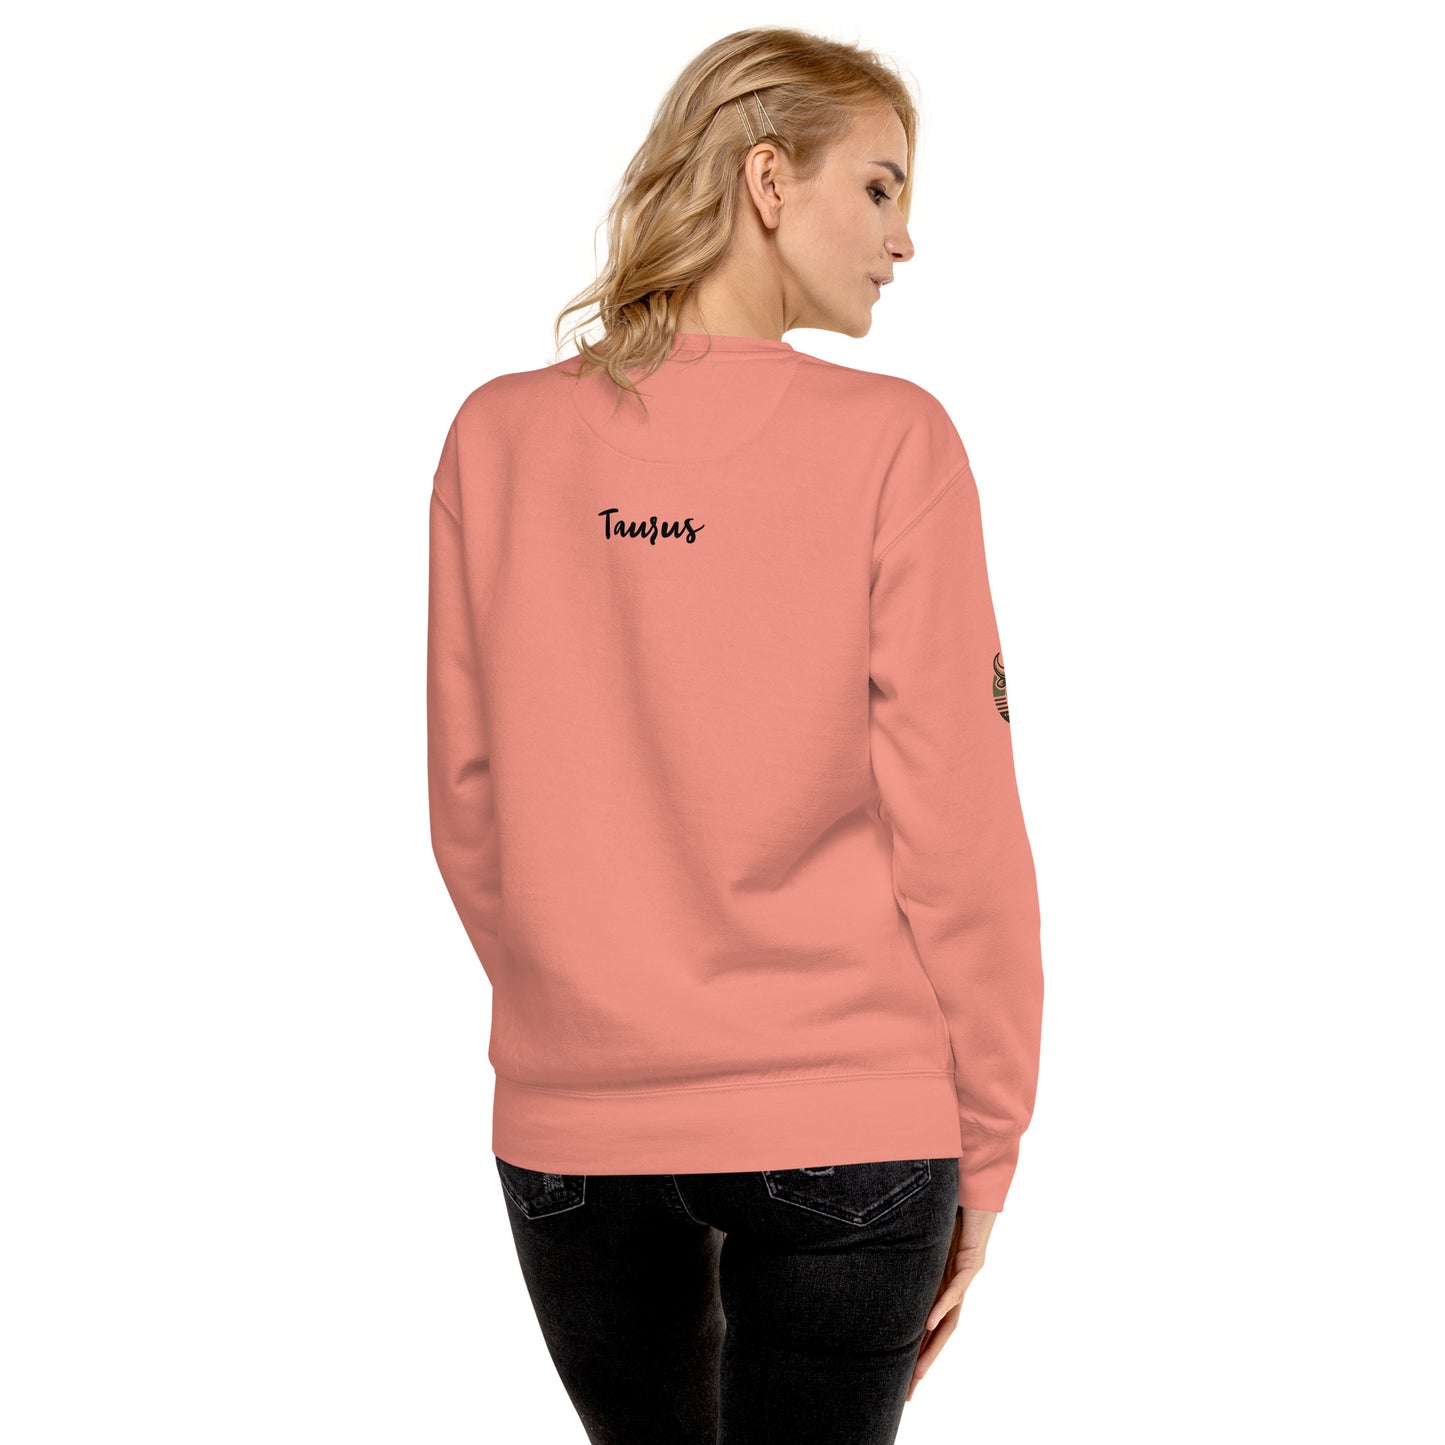 Taurus Unisex Premium Sweatshirt